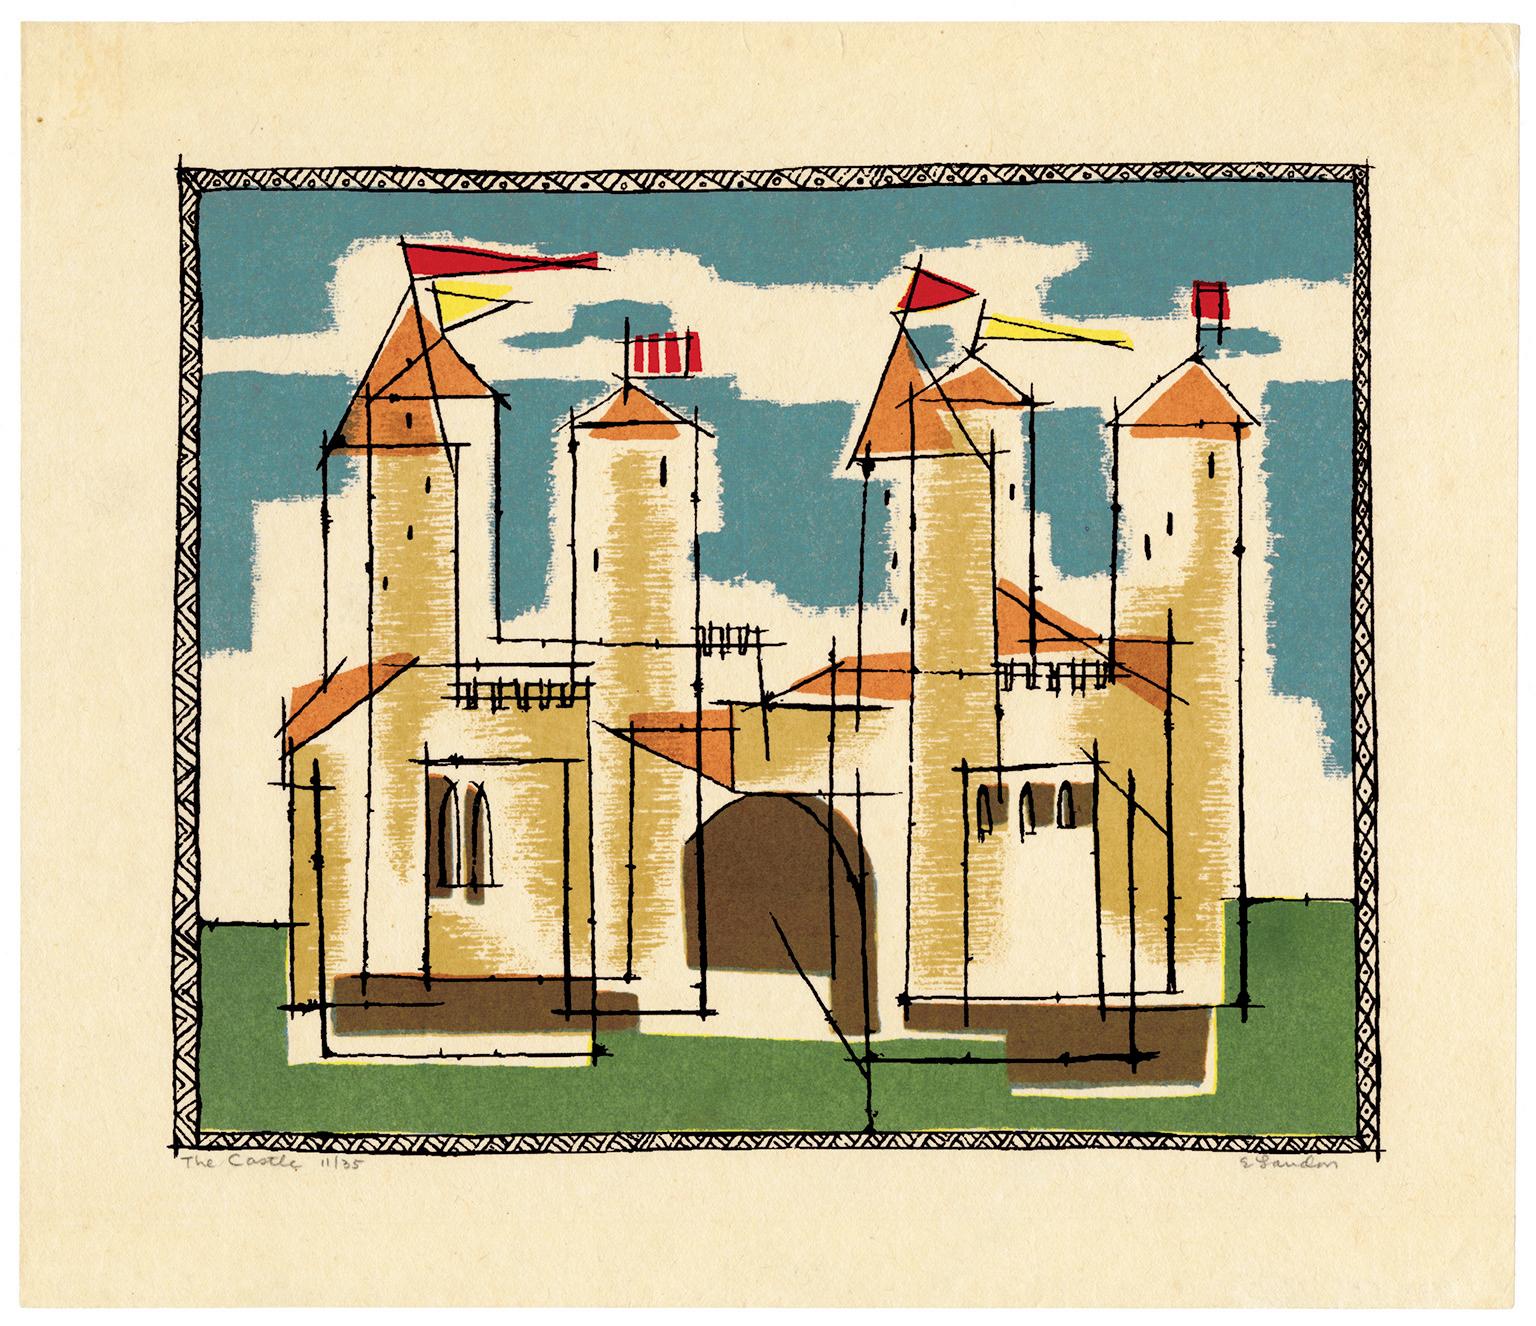 'The Castle' — Mid-Century Modernist Children's Fantasy - Print by Edward August Landon